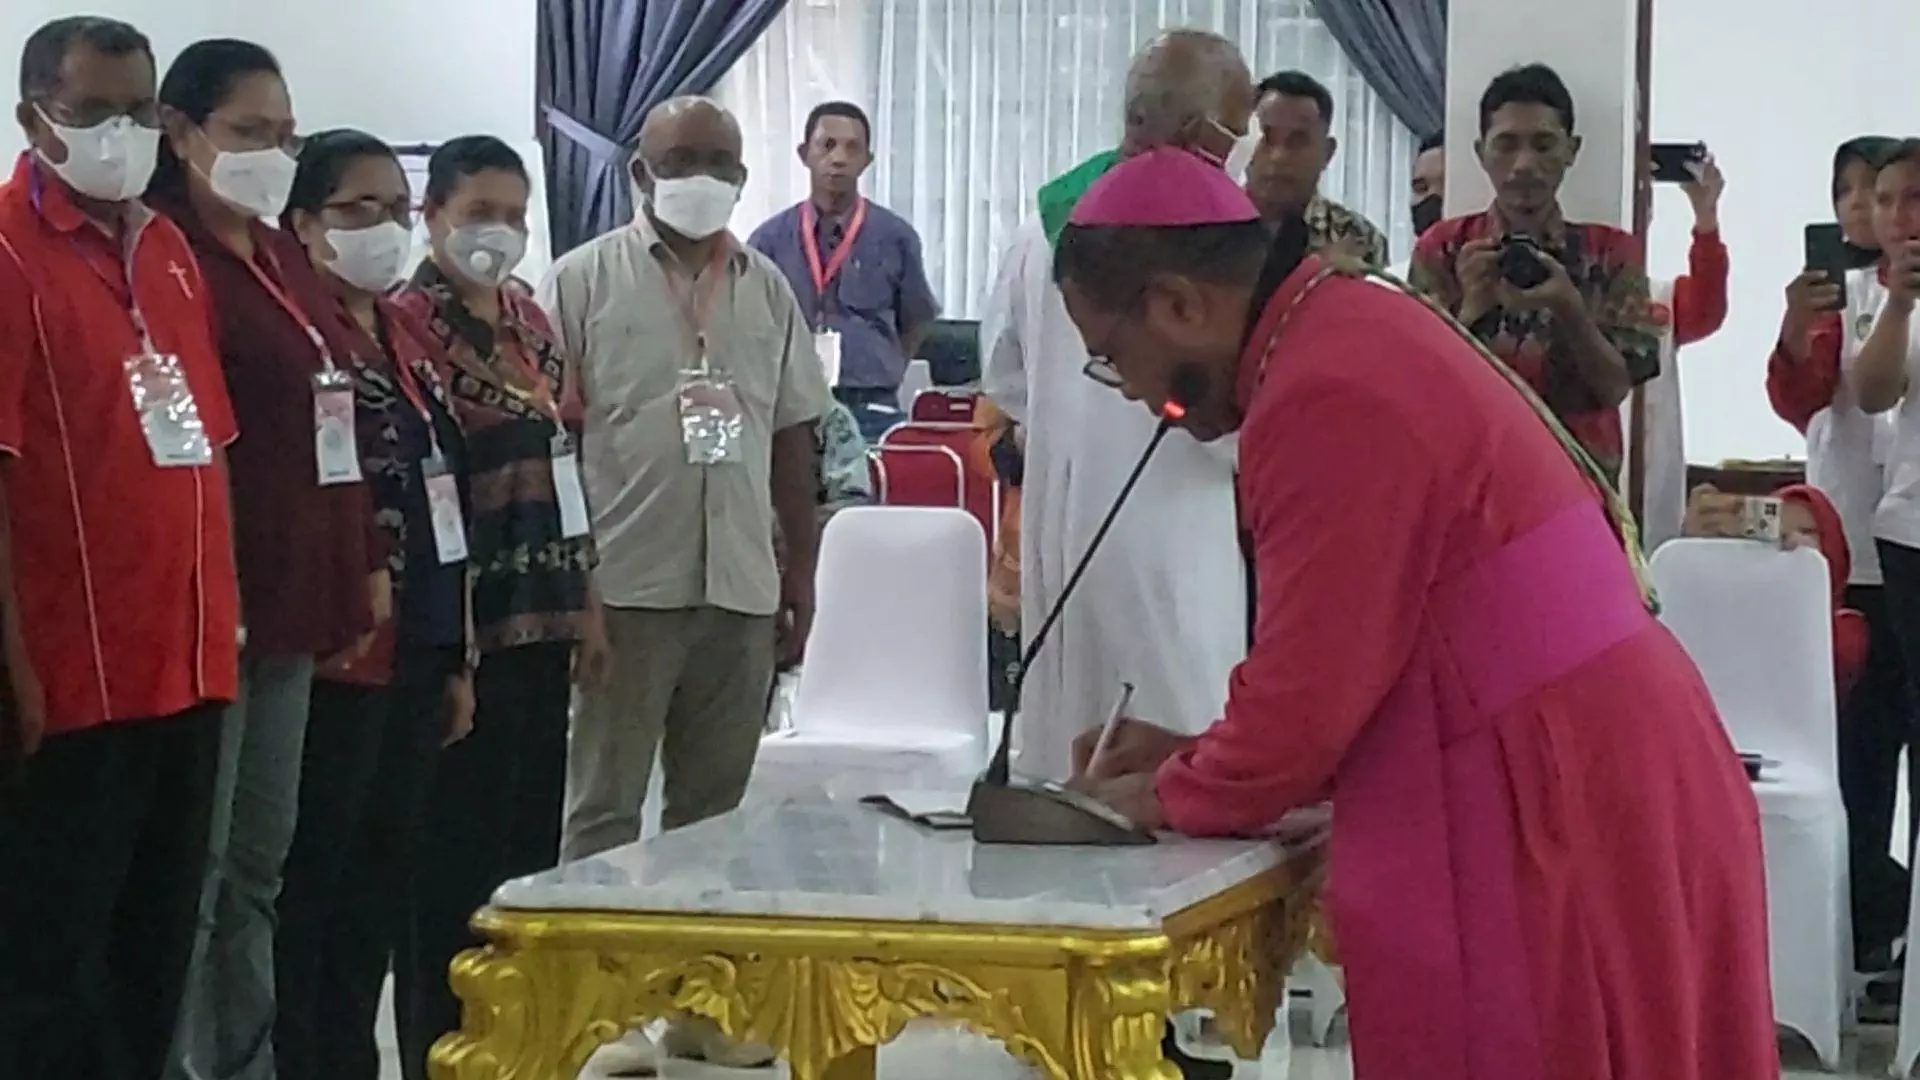 Uskup amboina melantik dewan juri pesparani katolik iv provinsi maluku di aula balai kota tual, minggu pagi